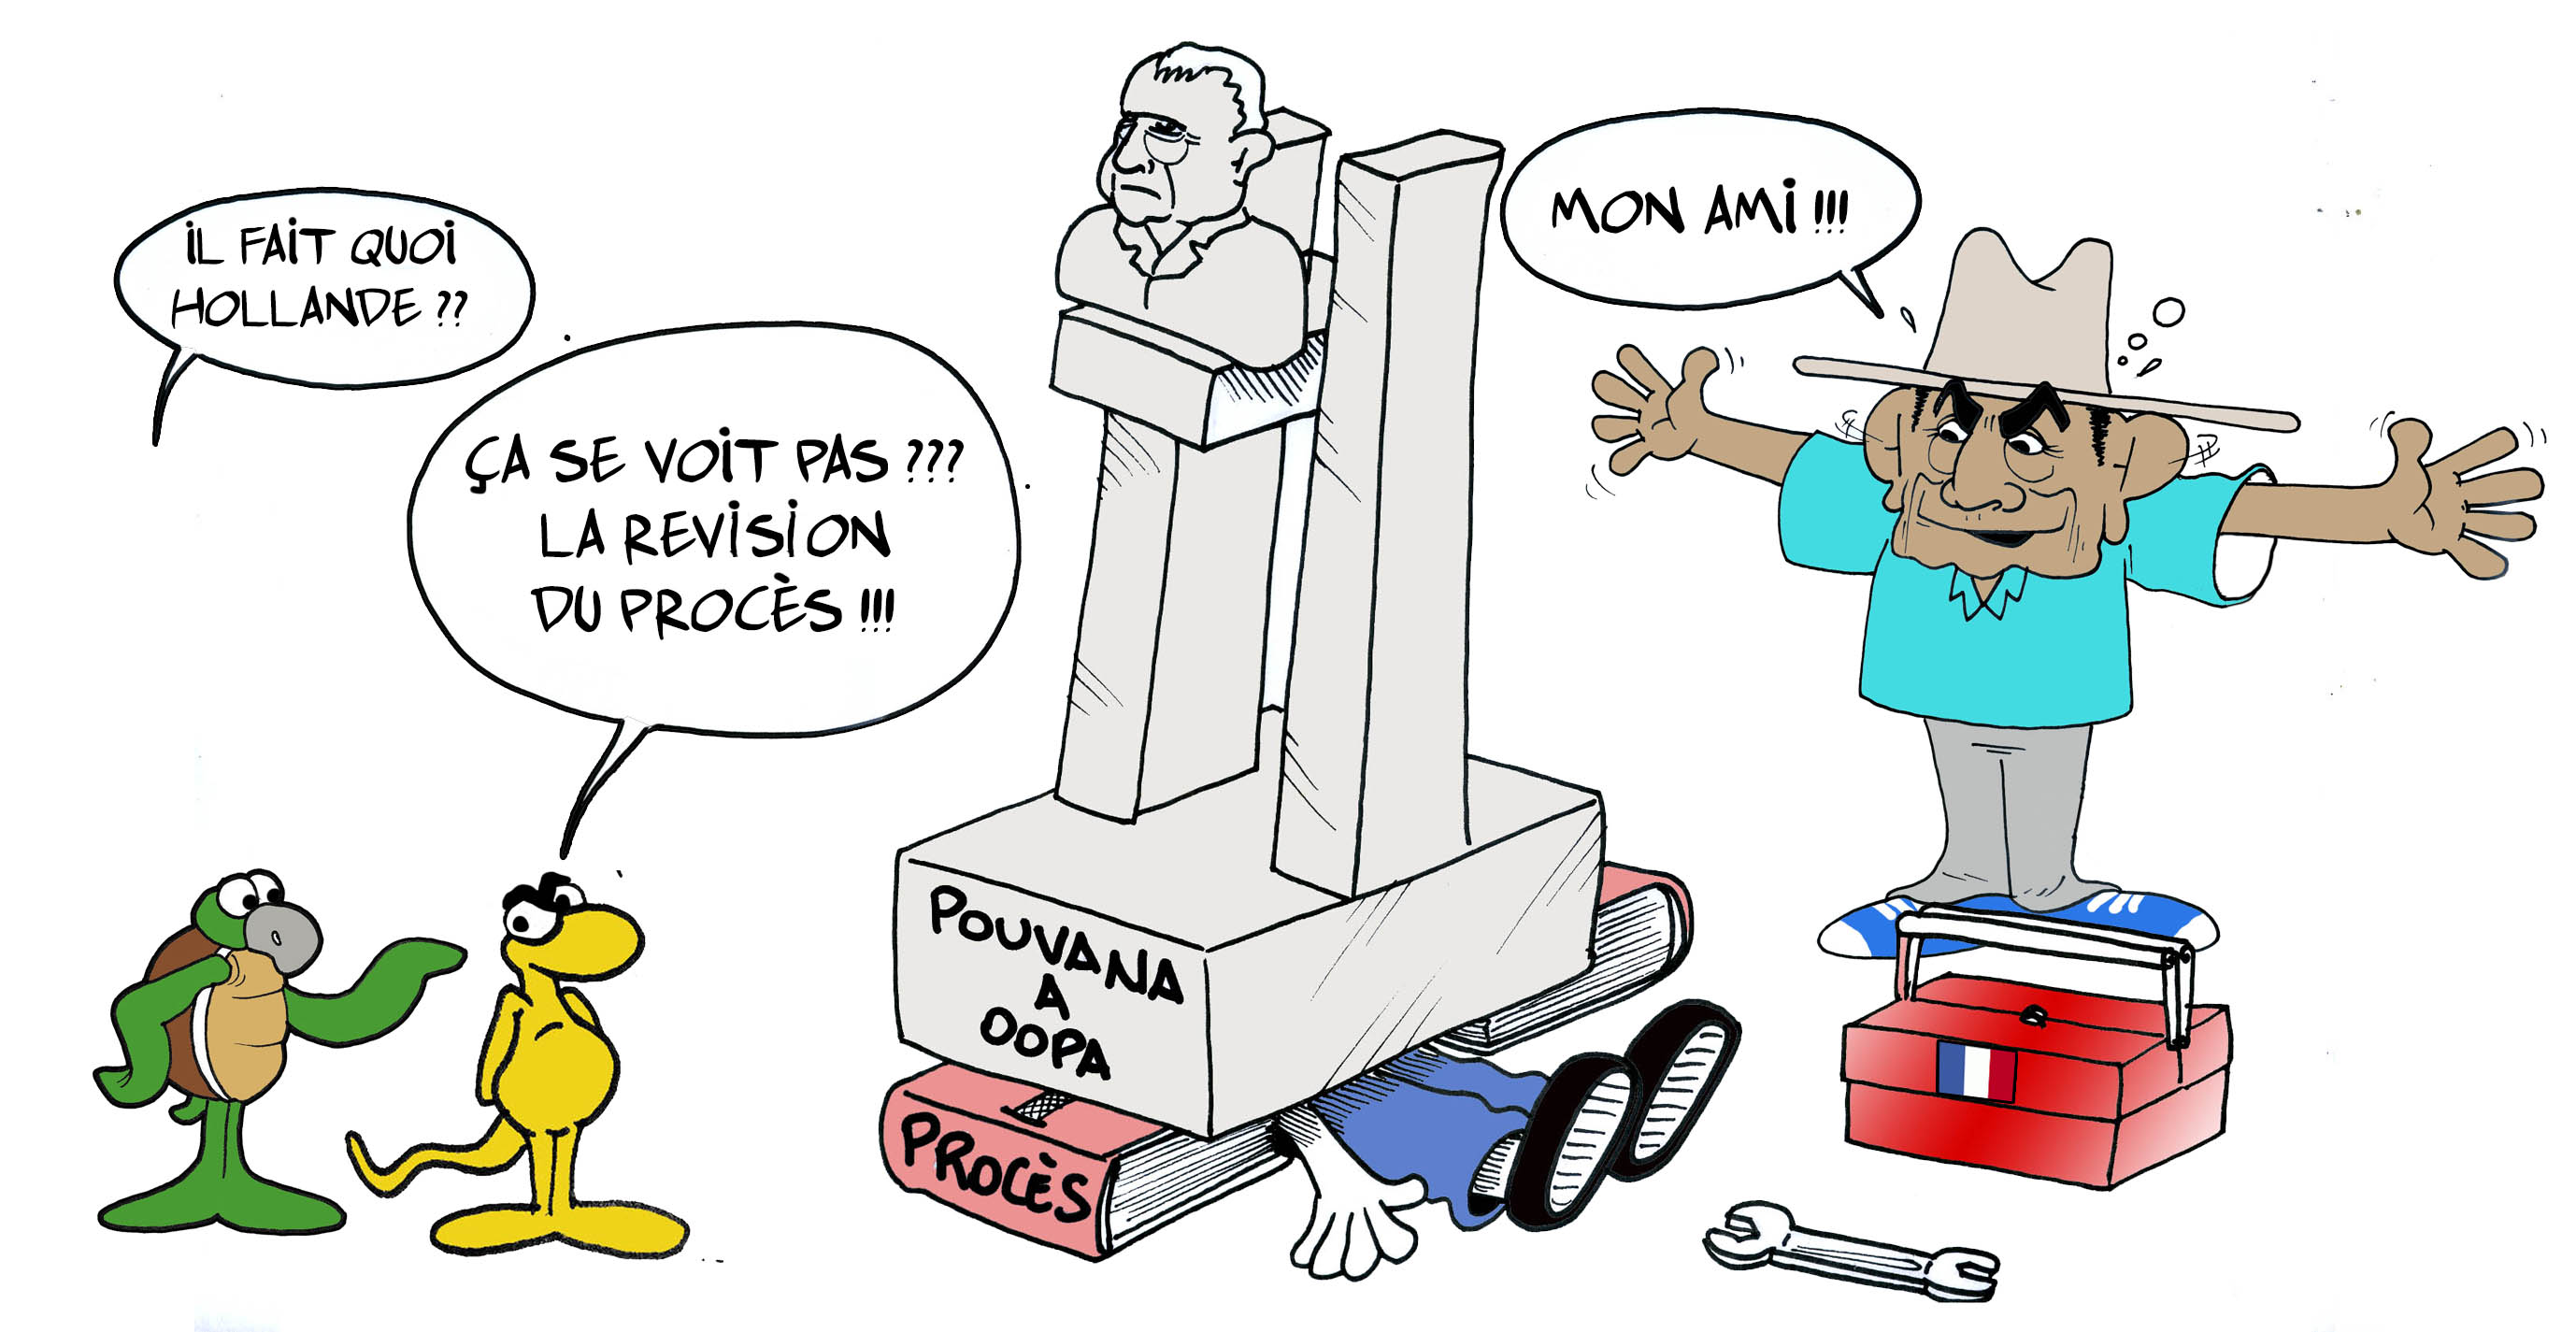 "Hollande et Pouvanaa a Oopa" par Munoz